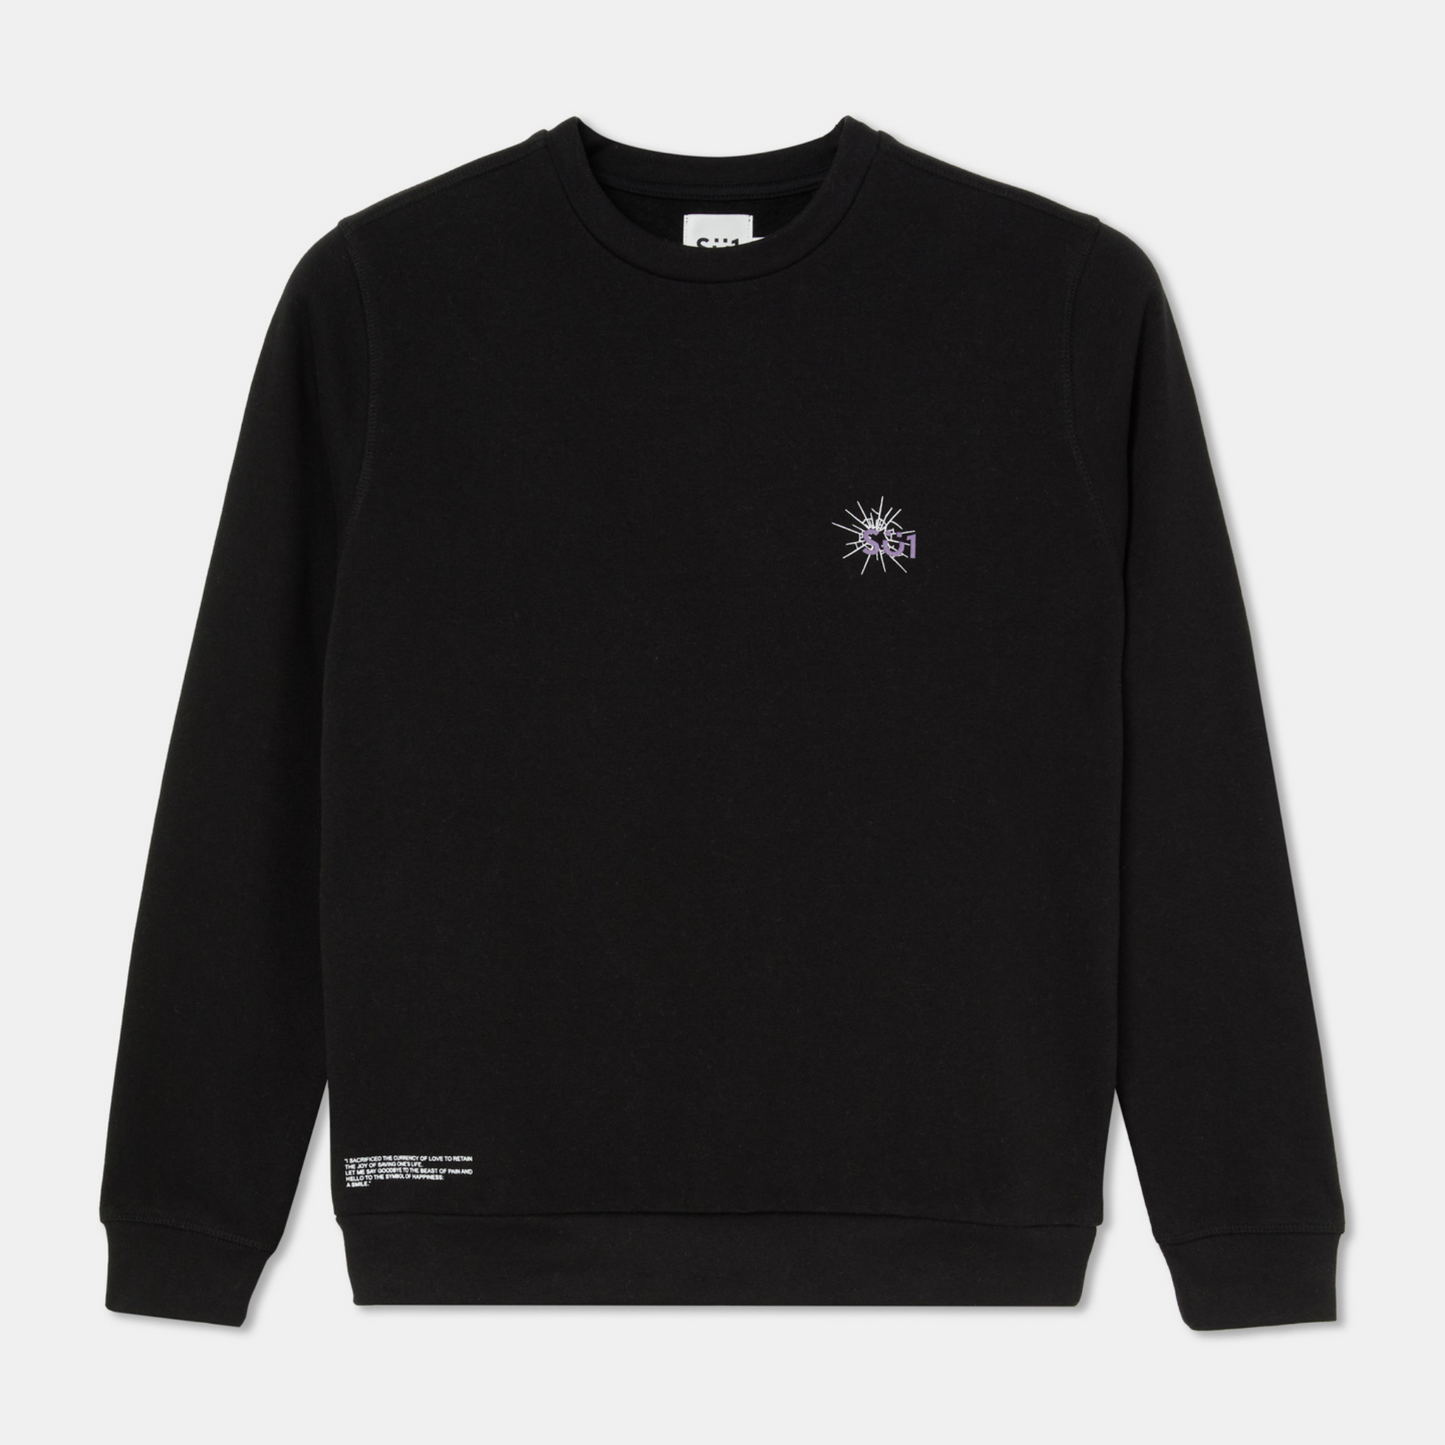 Sweatshirt Sweater Longsleeve Black with logo Front